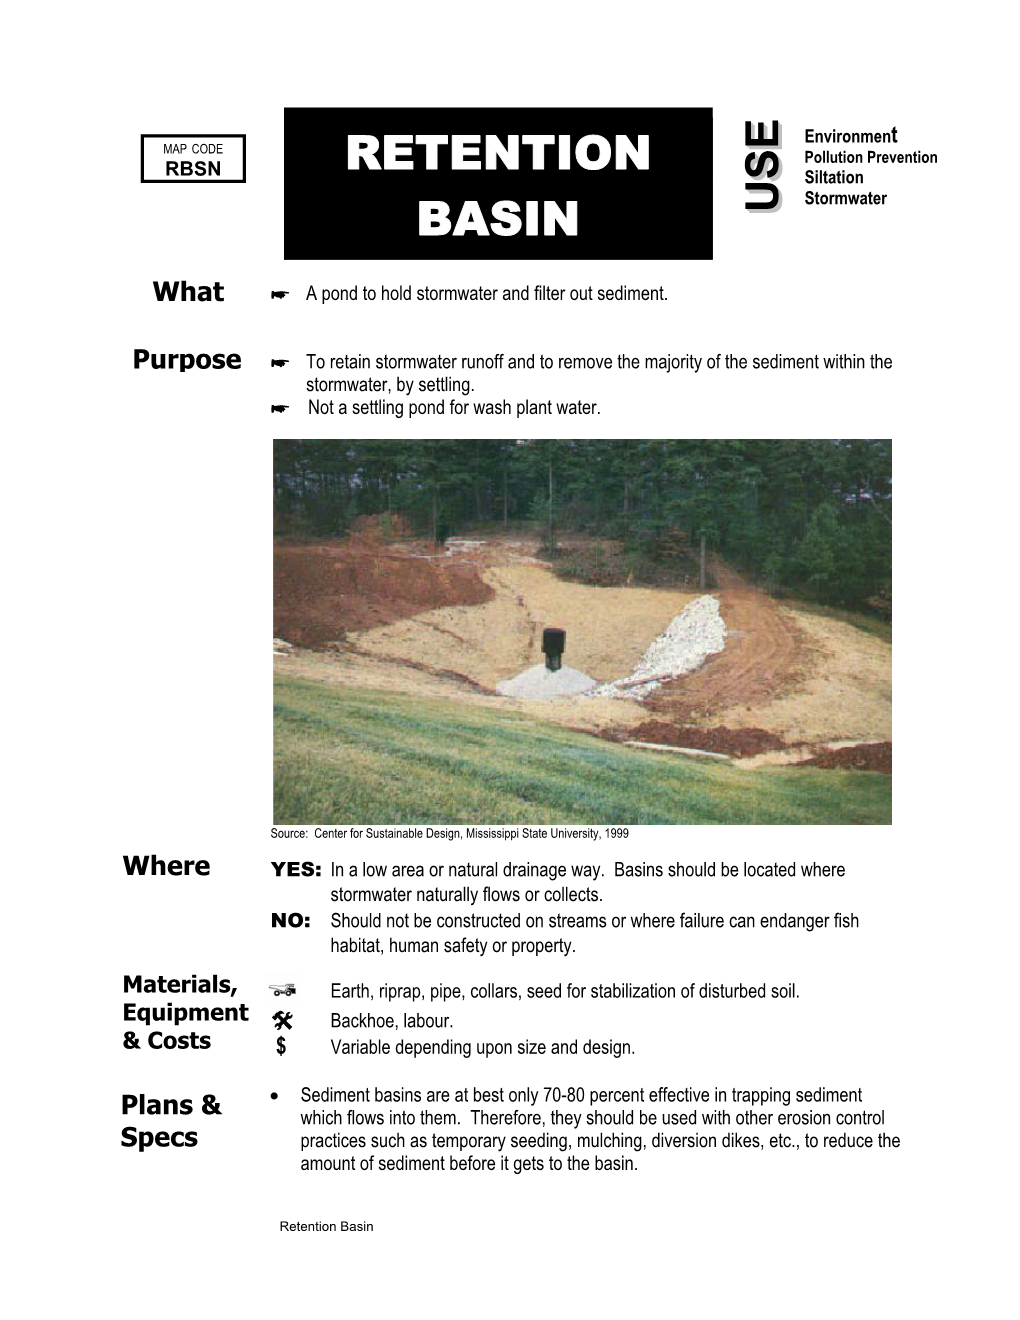 Retention Basin